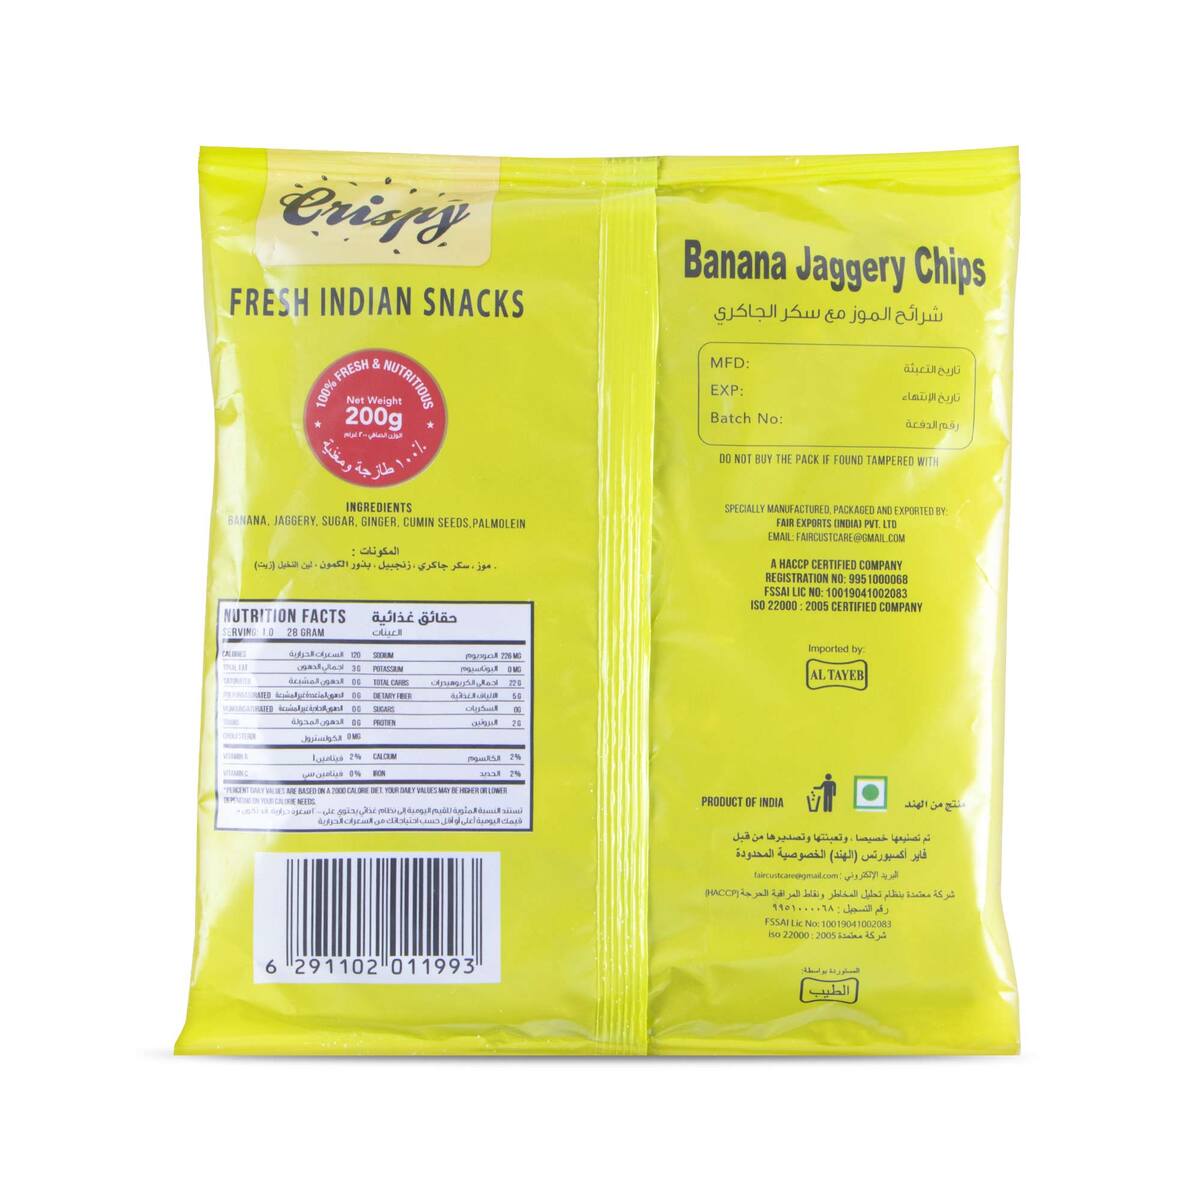 Crispy Banana Jaggery Chips 200 g